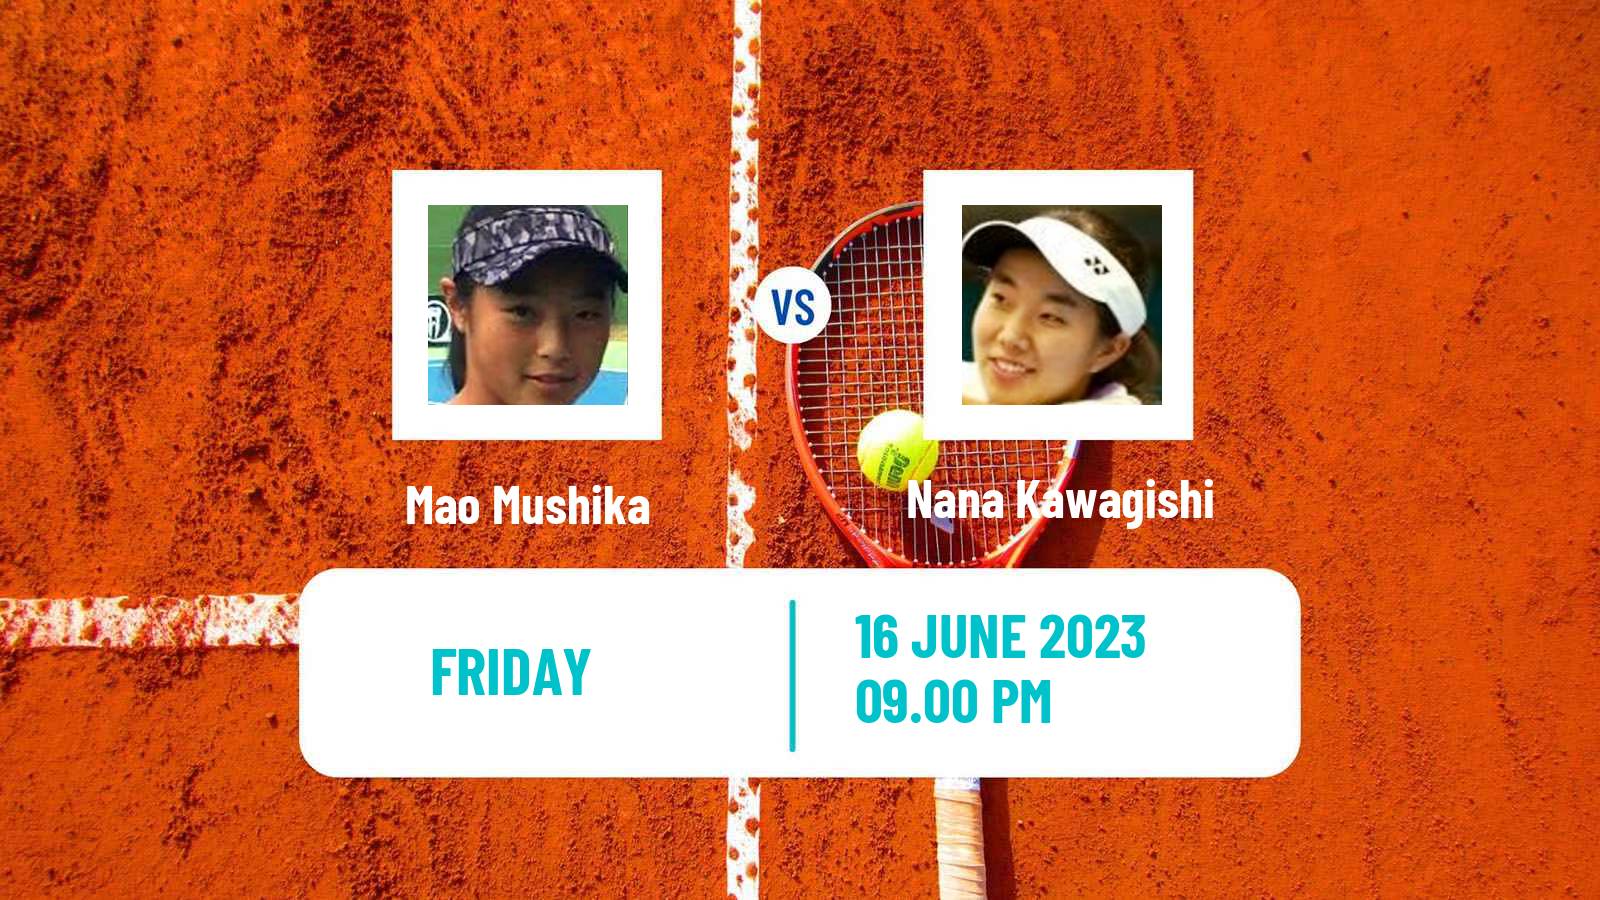 Tennis ITF W15 Kawaguchi Women Mao Mushika - Nana Kawagishi